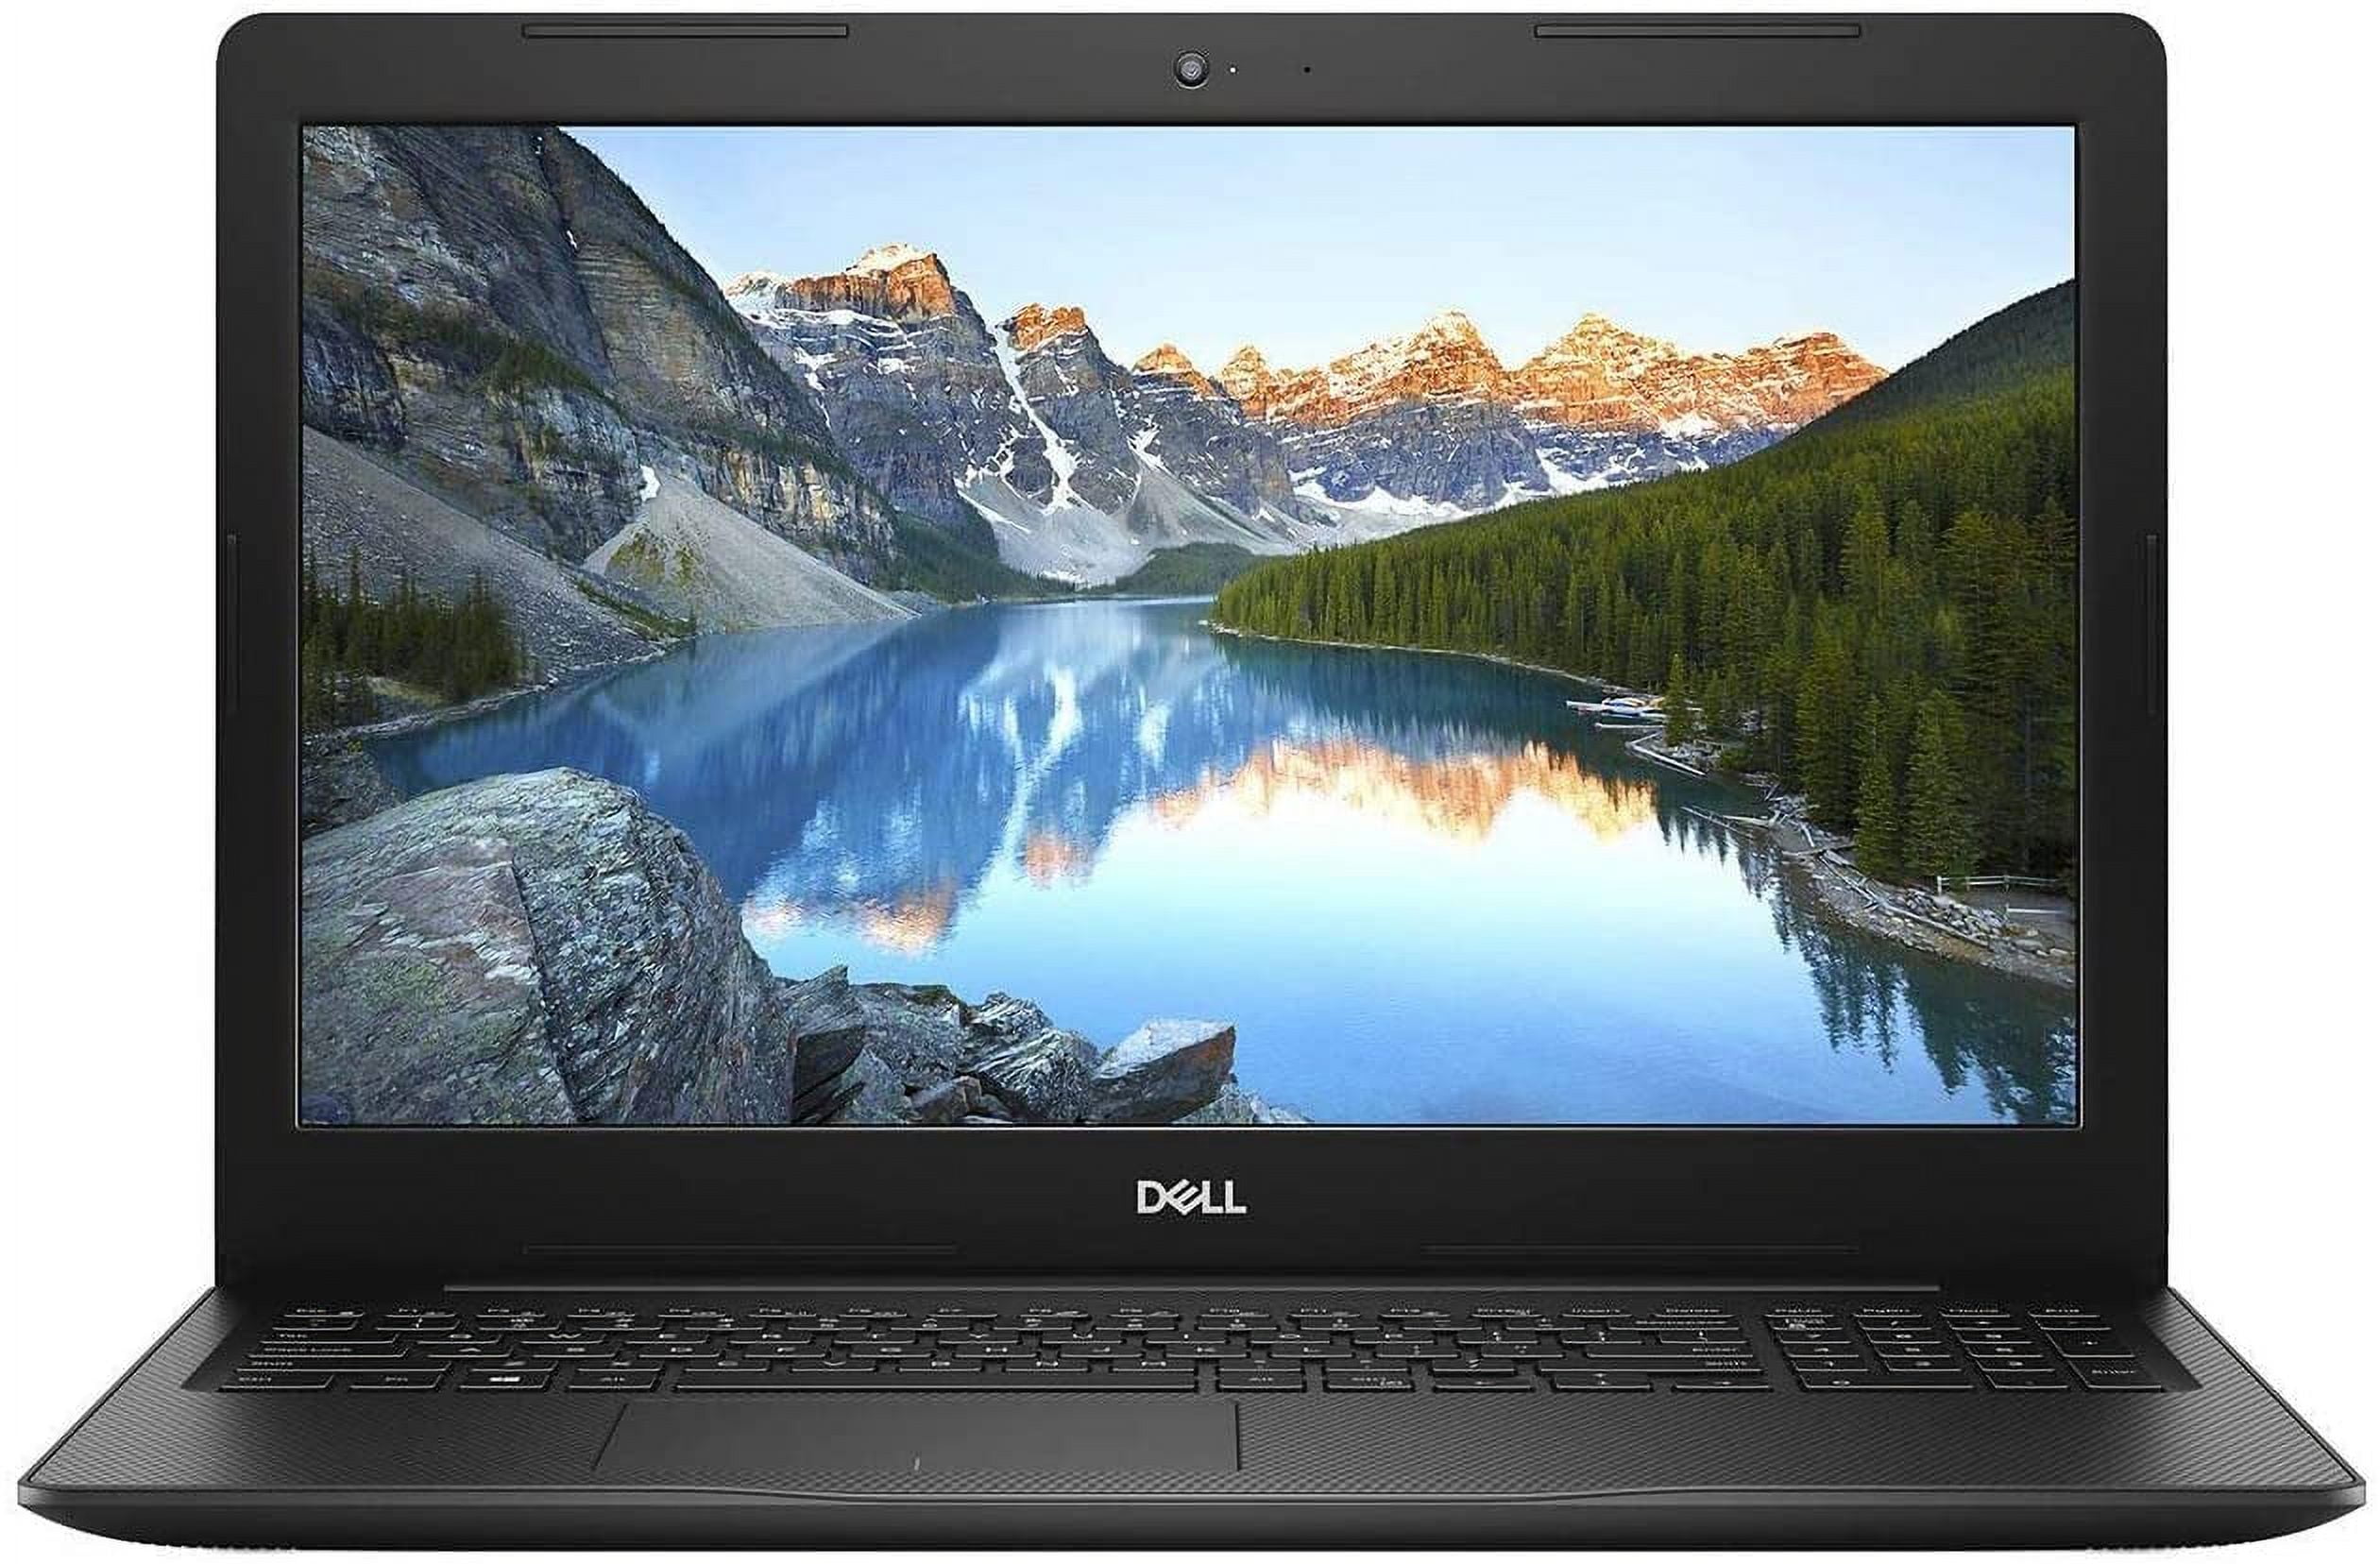 Dell Inspiron 3000 Laptop 15.6 Non-touch Intel® Celeron® Processor N4020  Graphics 600 4GB DDR4 Memory 128GB SSD Hard Drive Windows 10 Home (S mode)